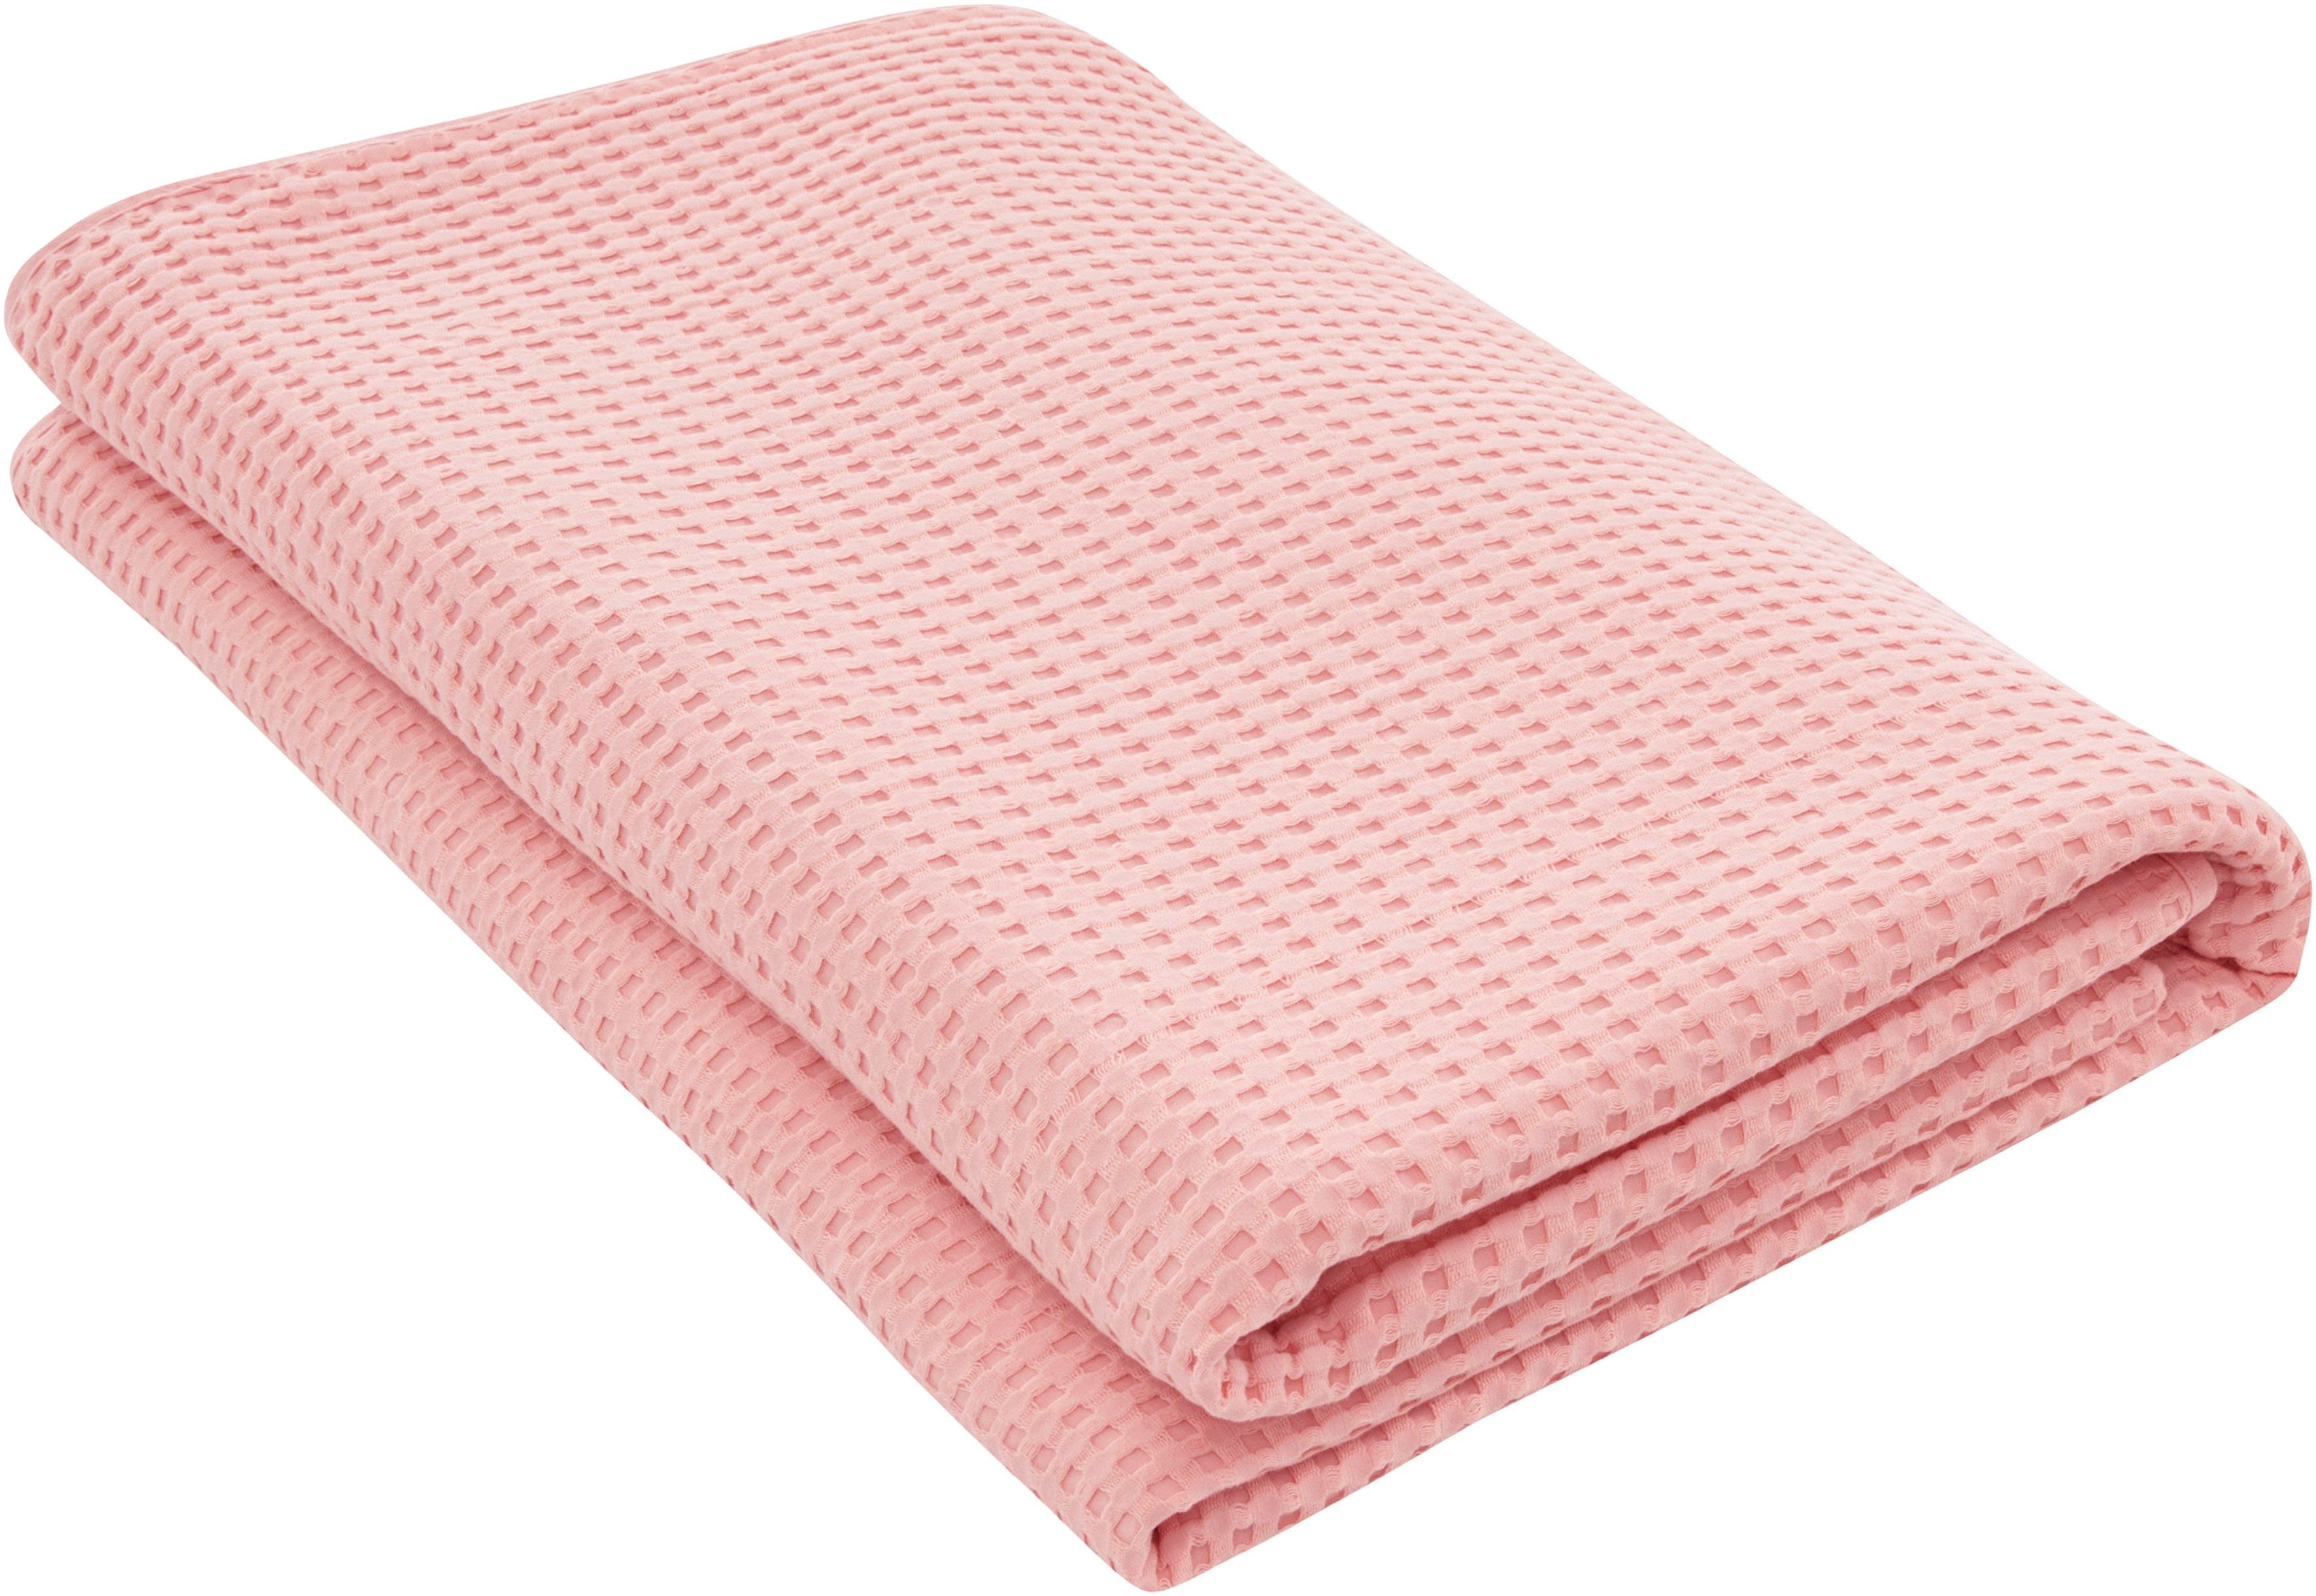 Tagesdecke GRETA, 150x250 Decke cm Farben Optik, ab viele rosa andas, erhältlich, Waffelpiqué in